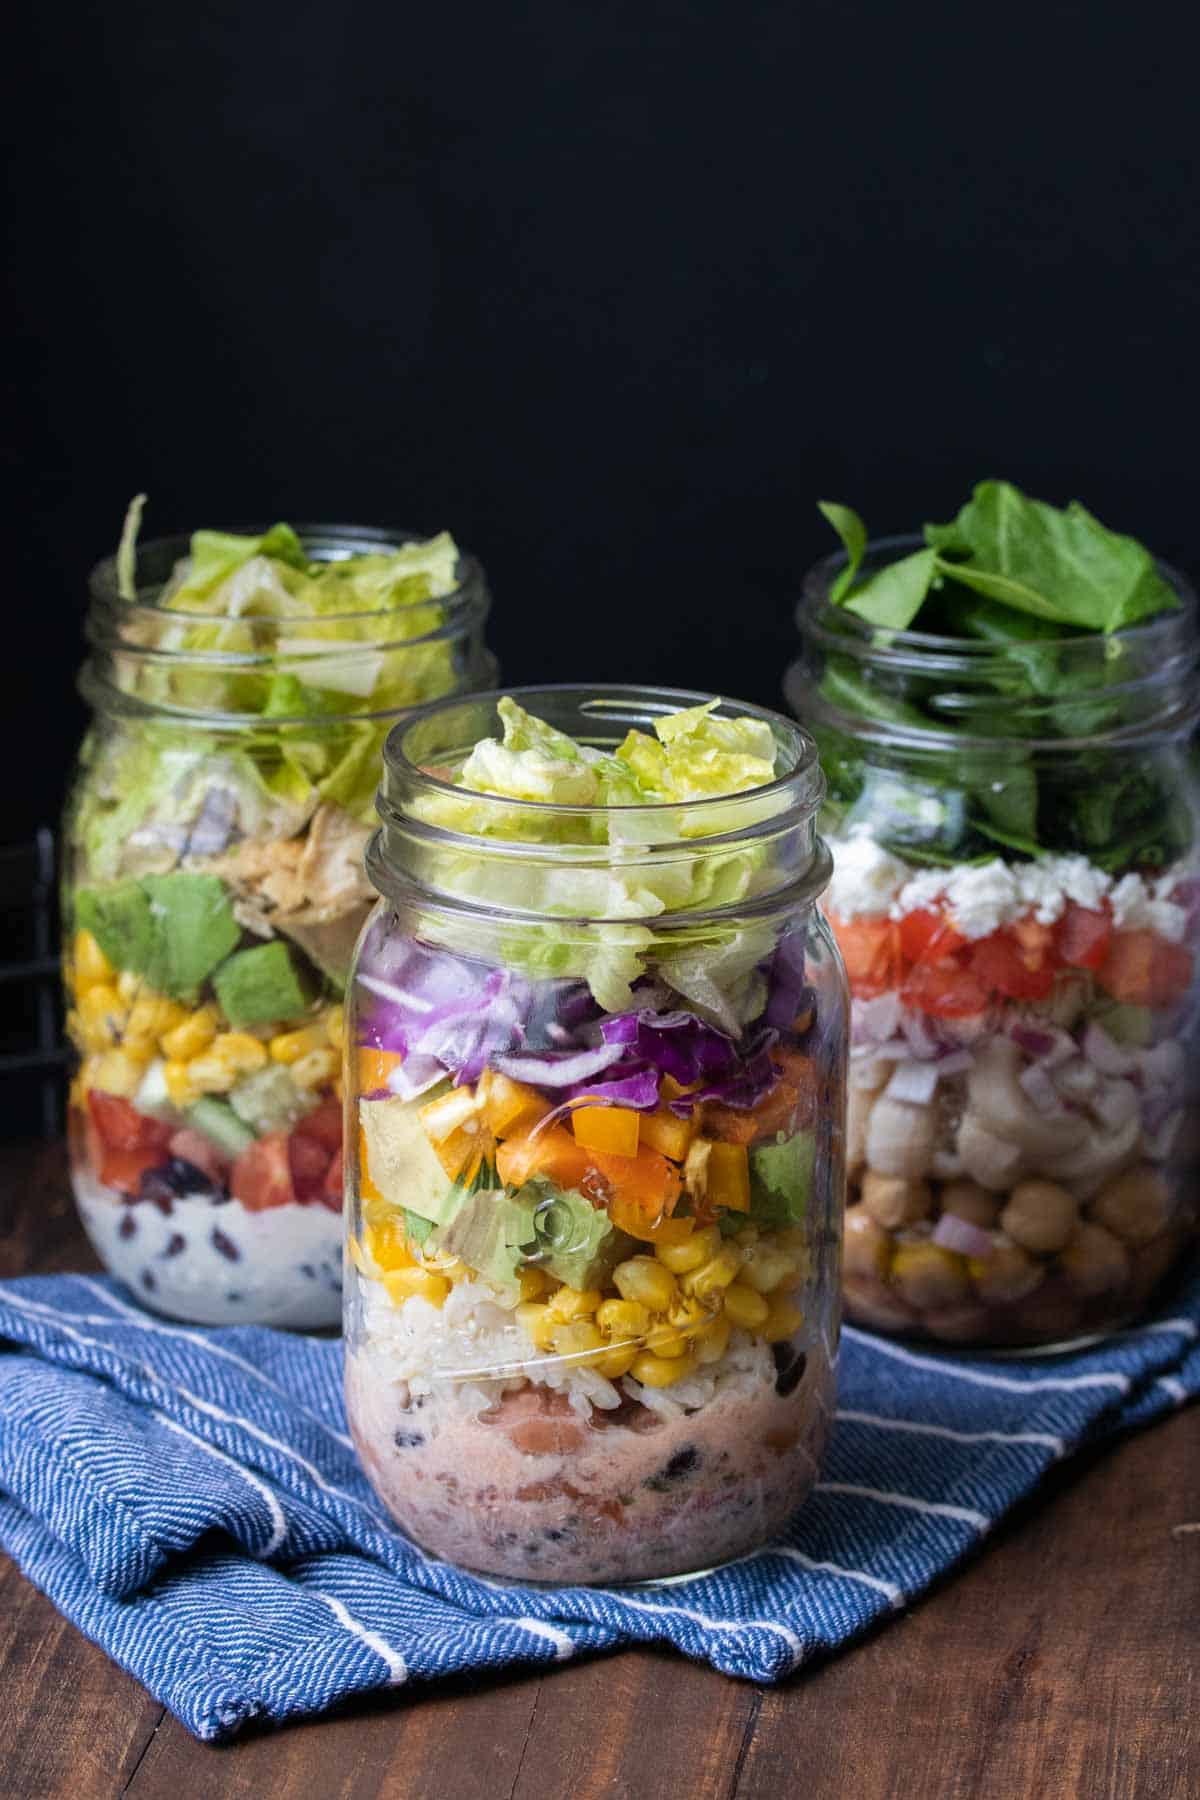 Salad in a Jar Recipes - Veggies Don't Bite